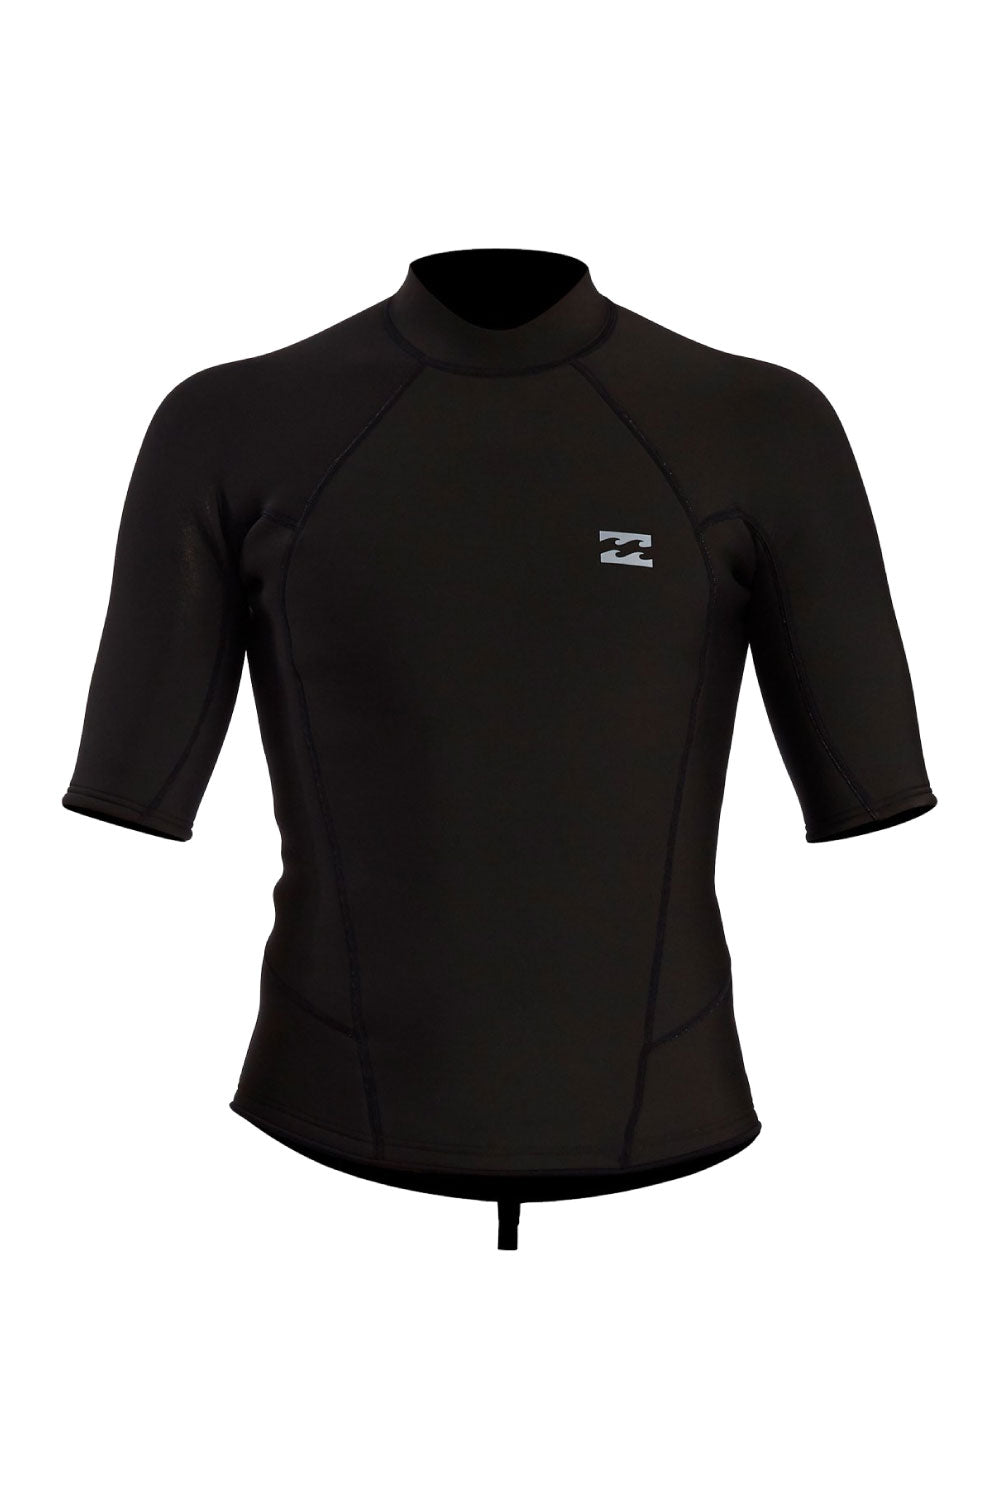 Billabong Men's Absolute Short Sleeve Wetsuit Vest